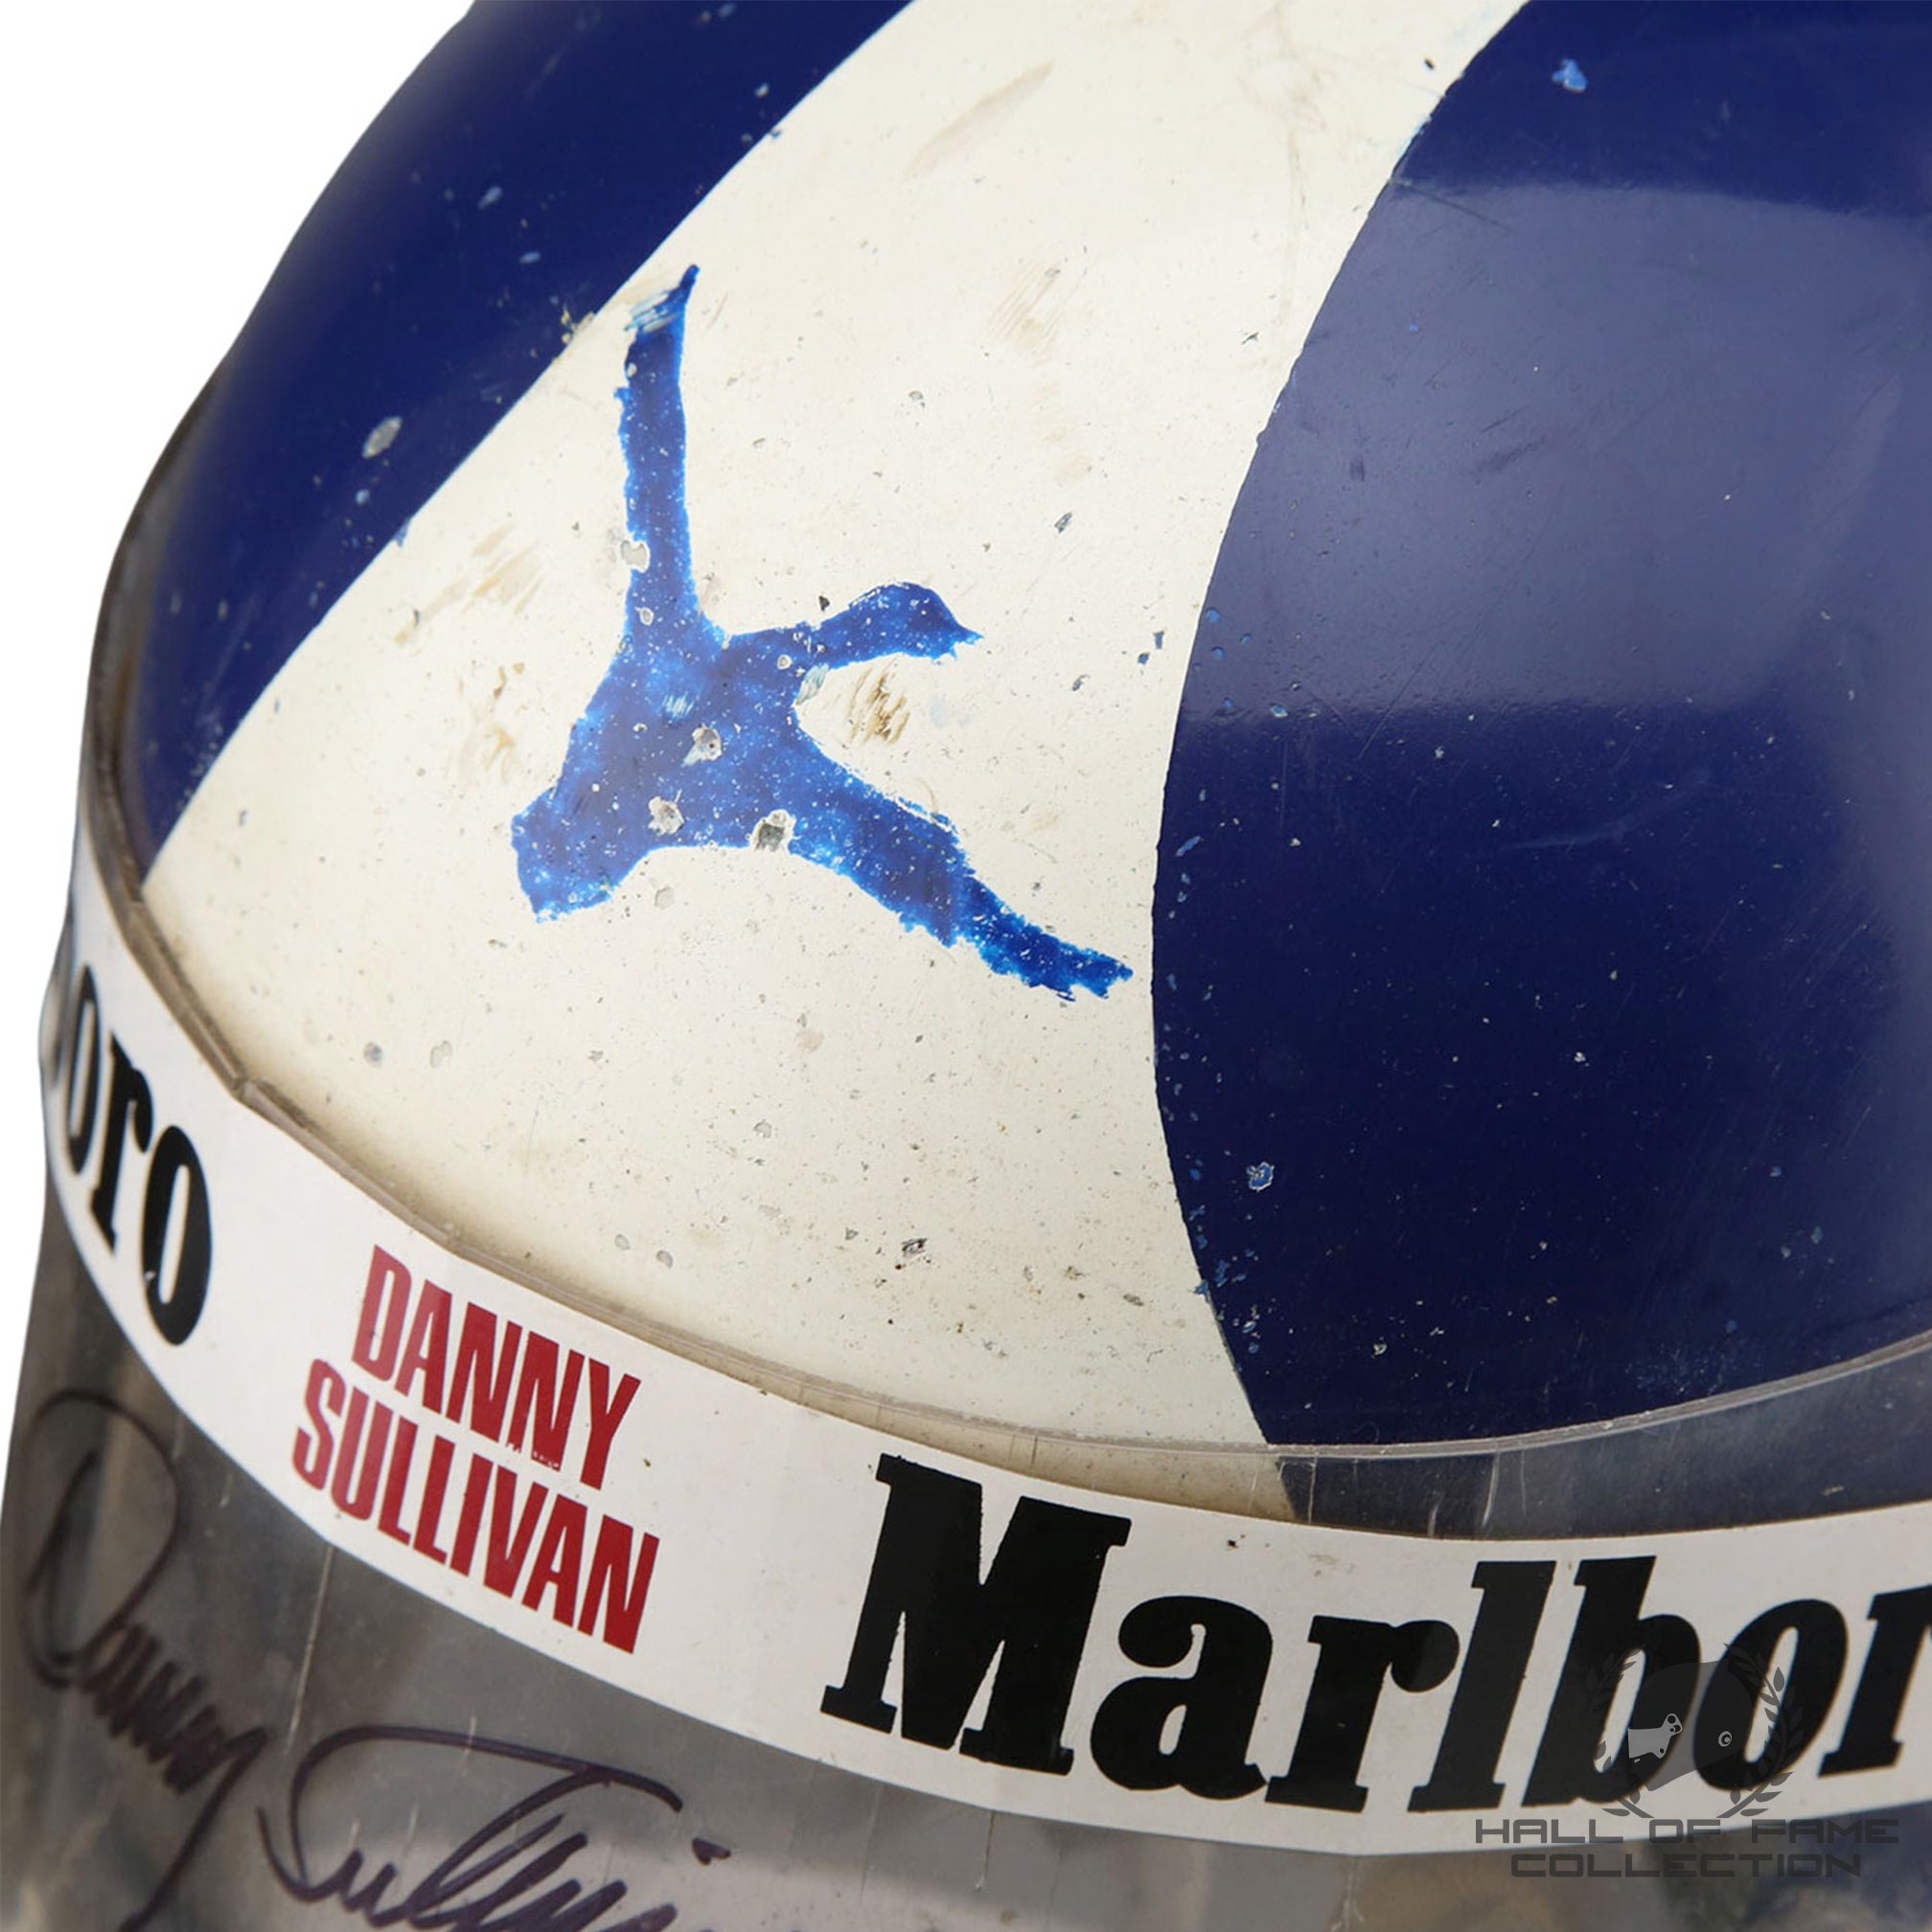 1975-78 Danny Sullivan Race Used Formula Atlantic F2 and F3 Helmet